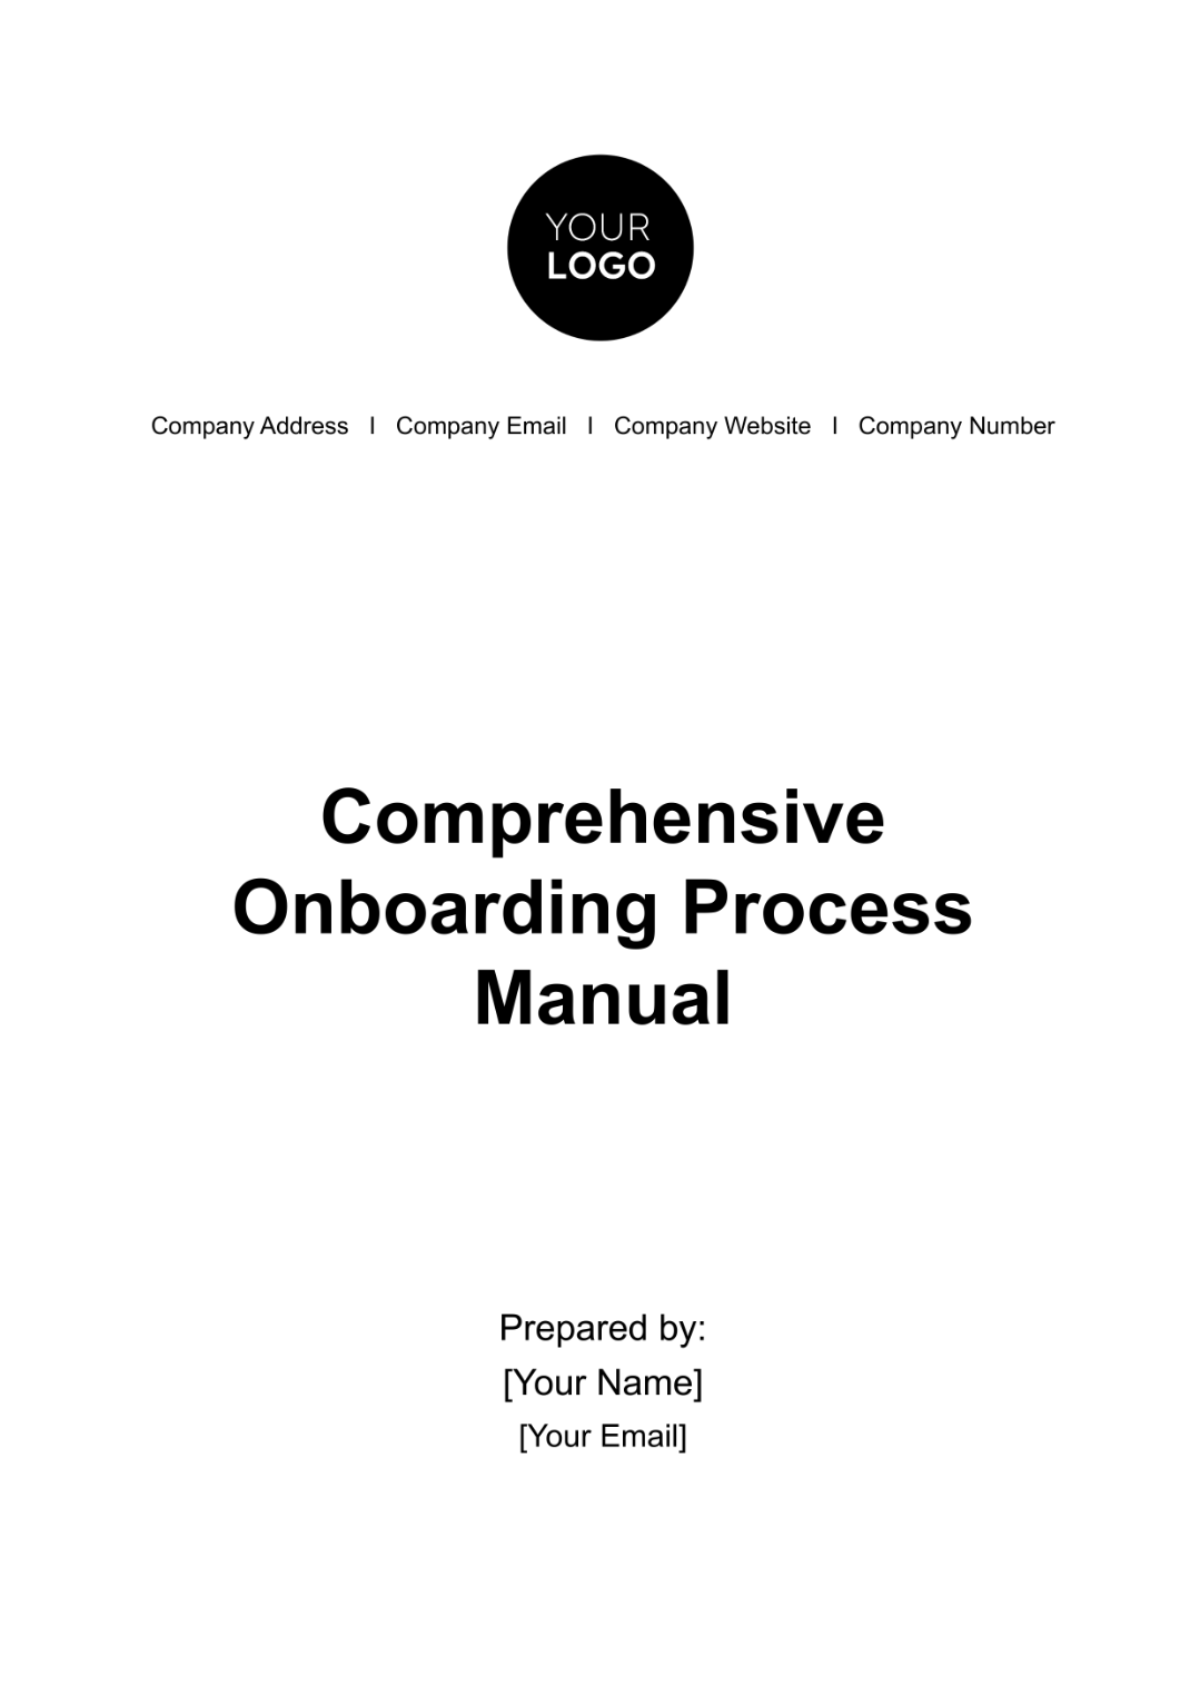 Comprehensive Onboarding Process Manual HR Template